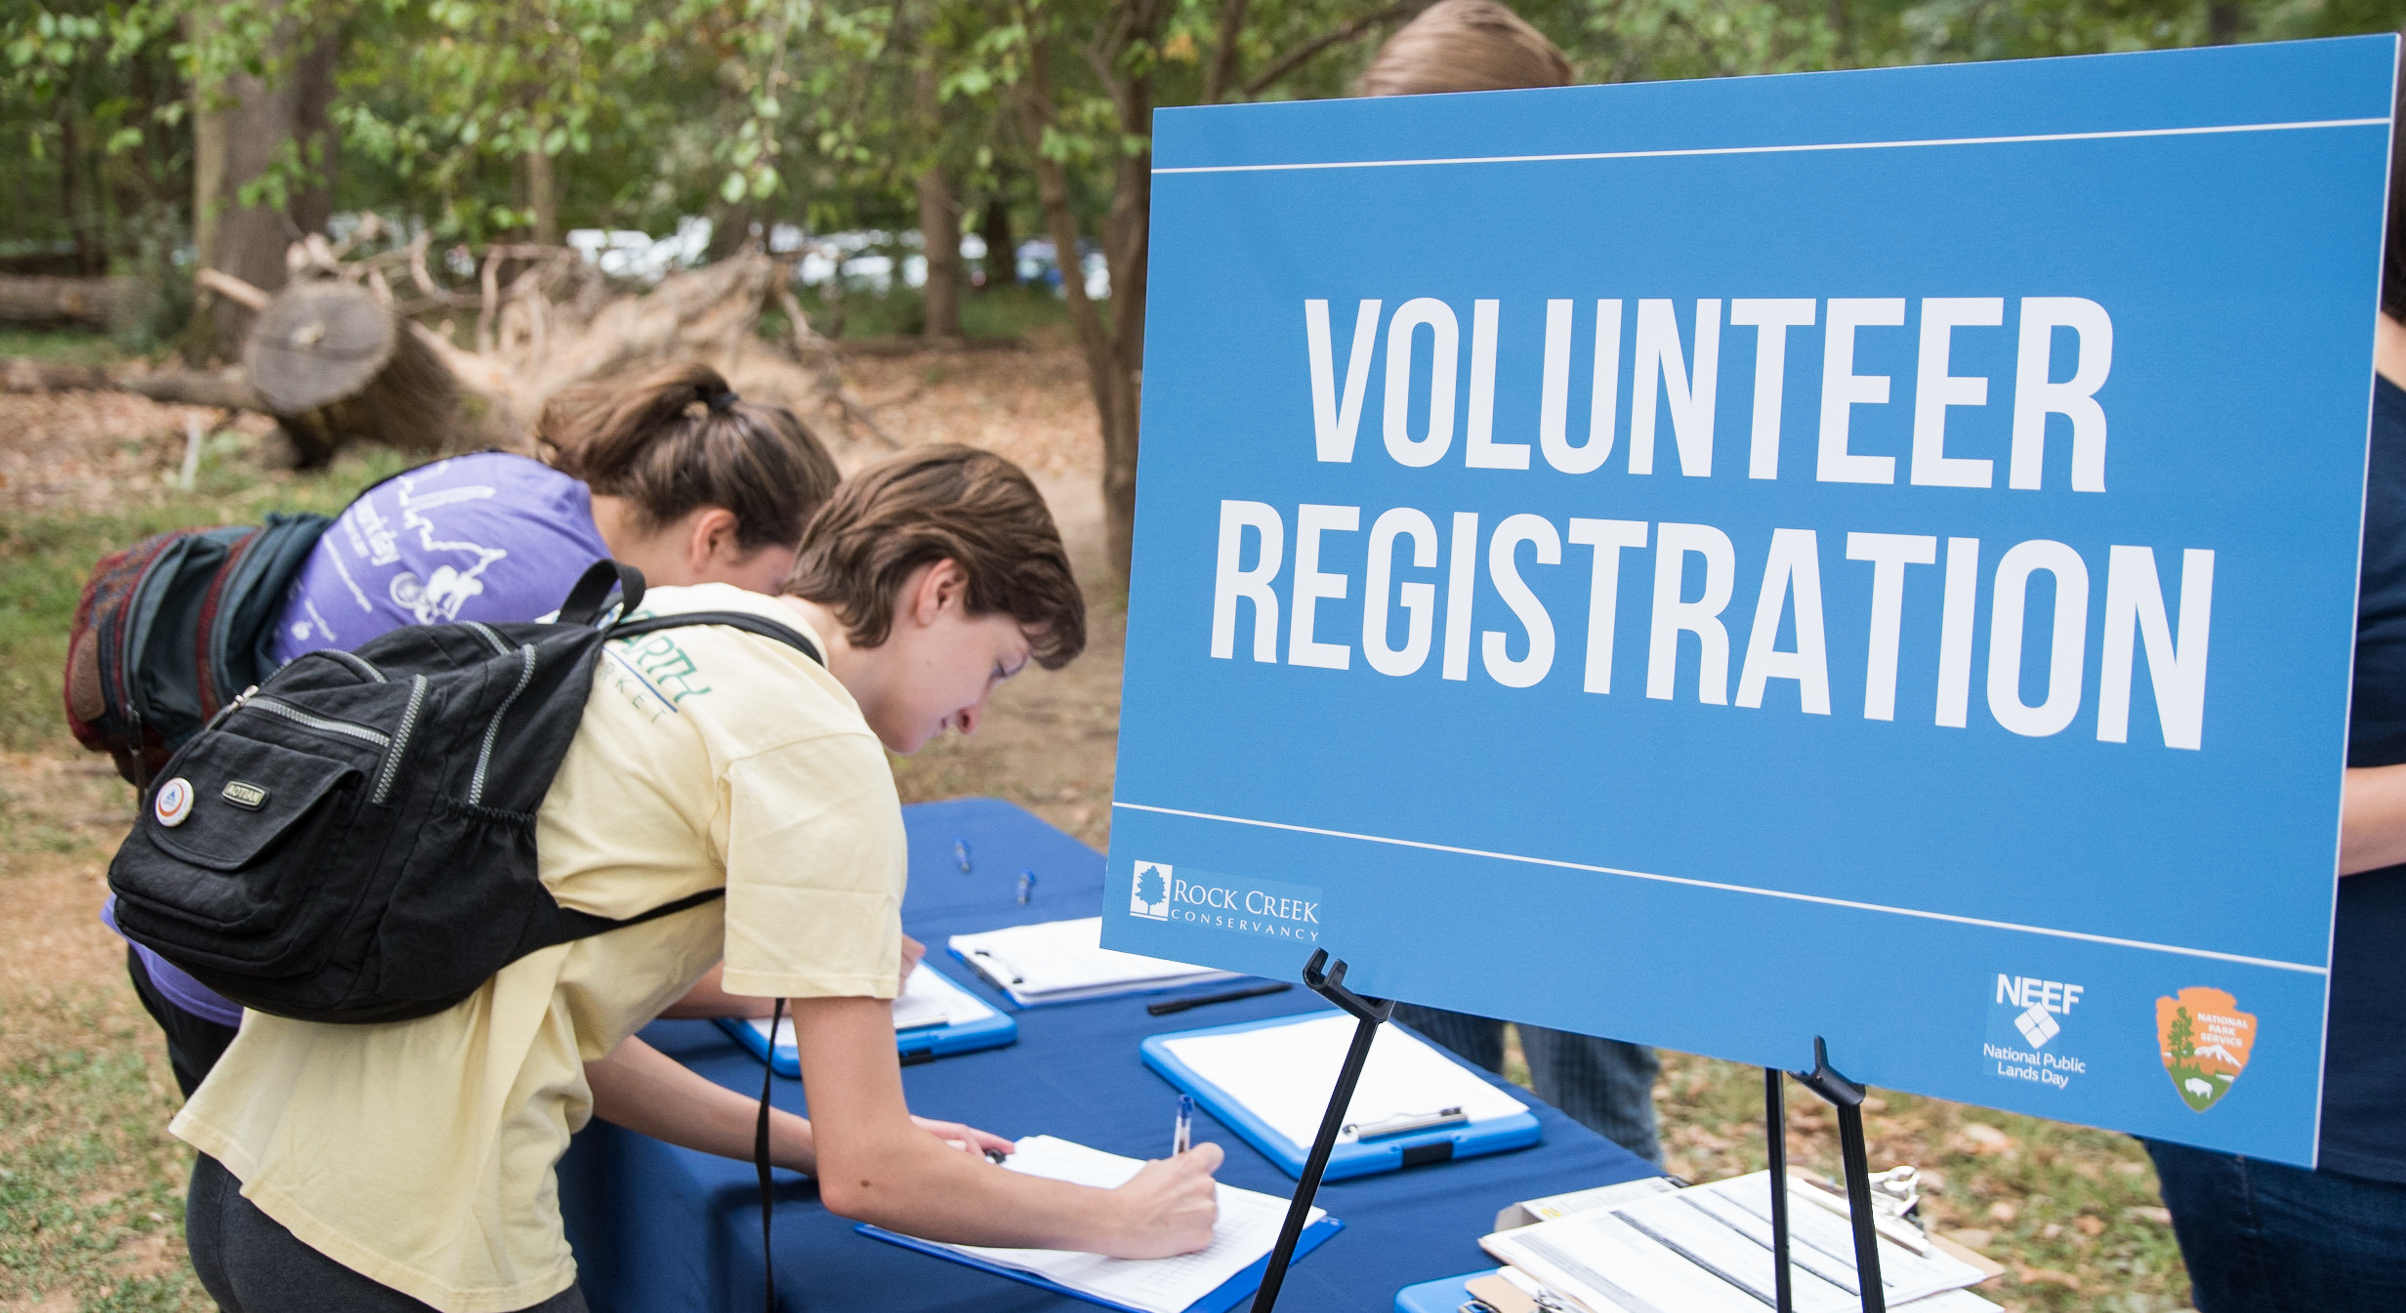 NPLD volunteer sign up at Rock Creek Park, photo by Jason Dixon